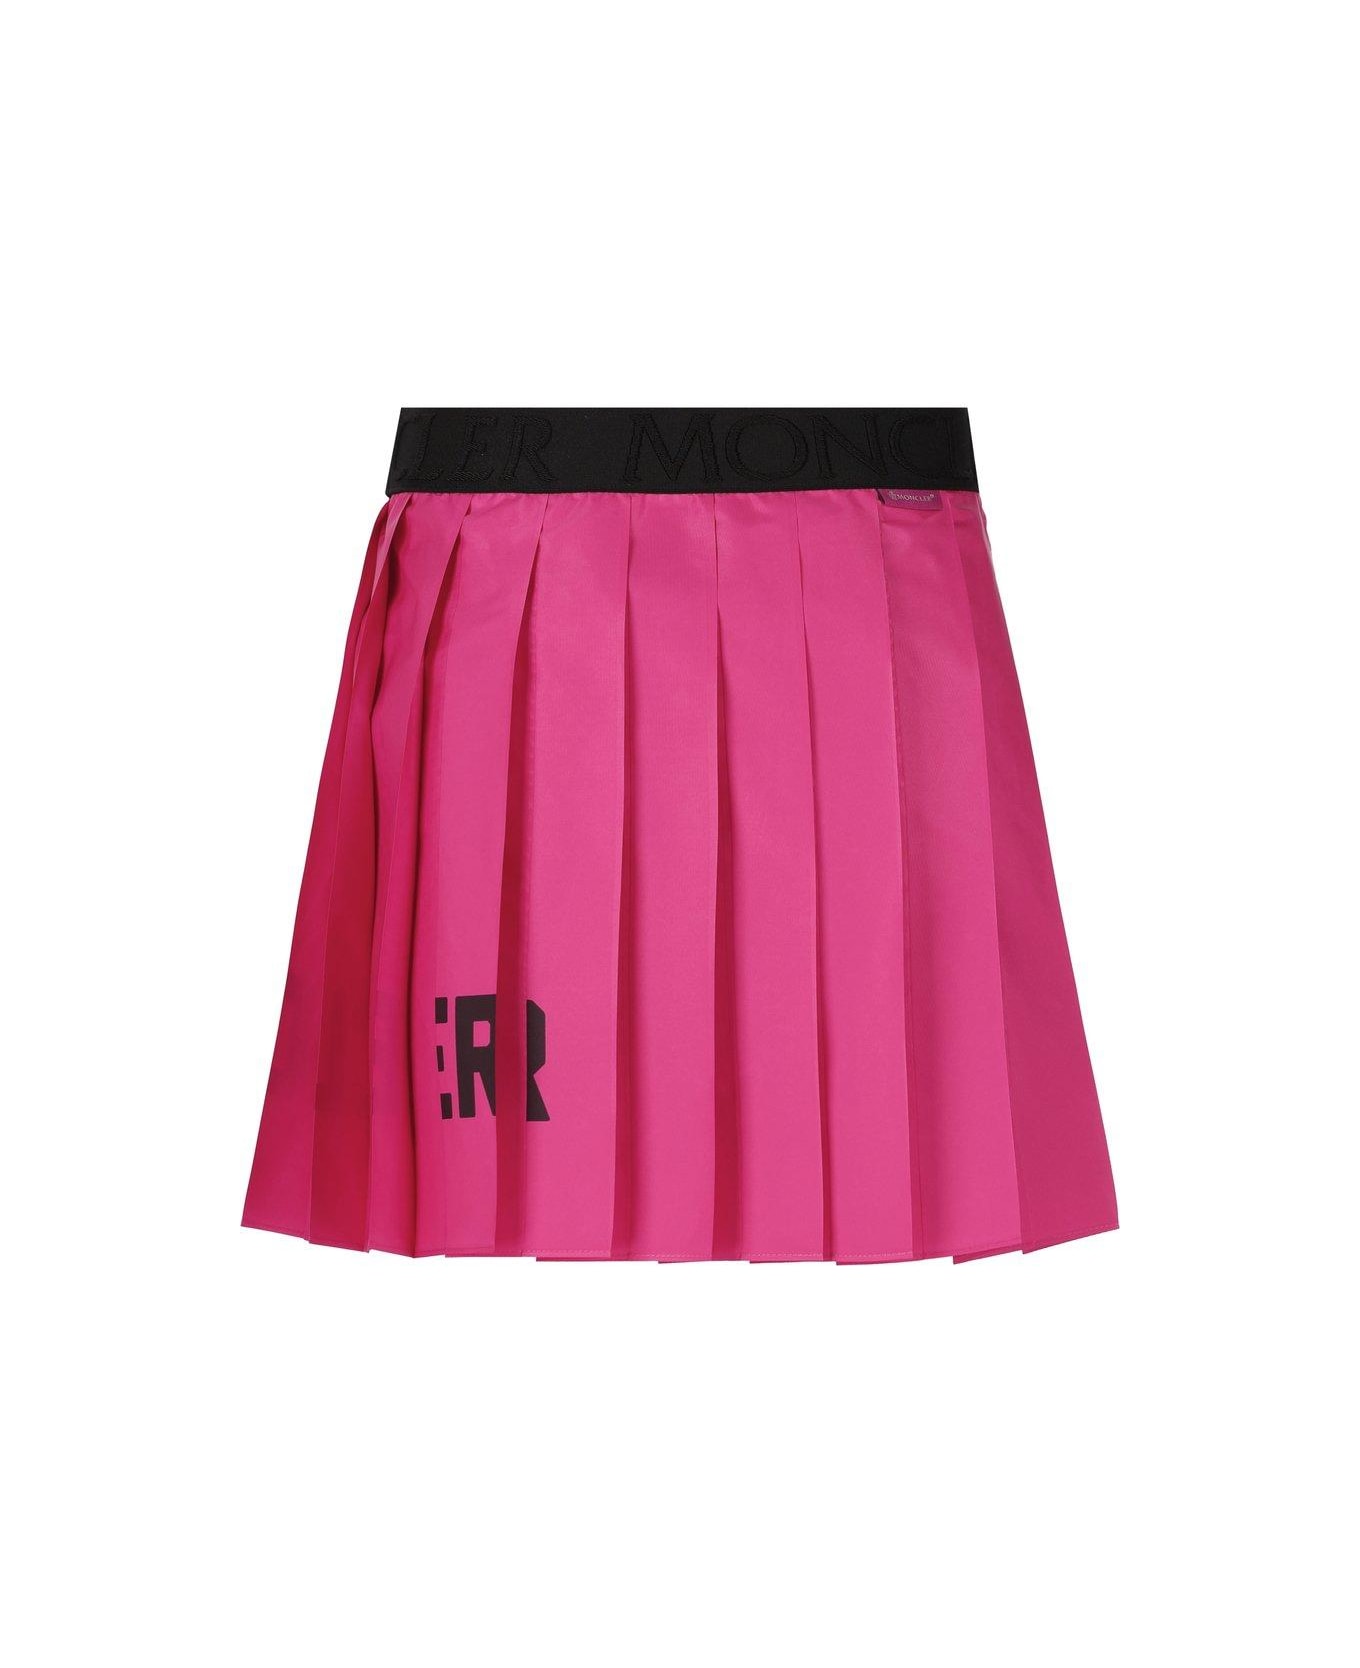 Moncler Logo Printed Pleated Skirt